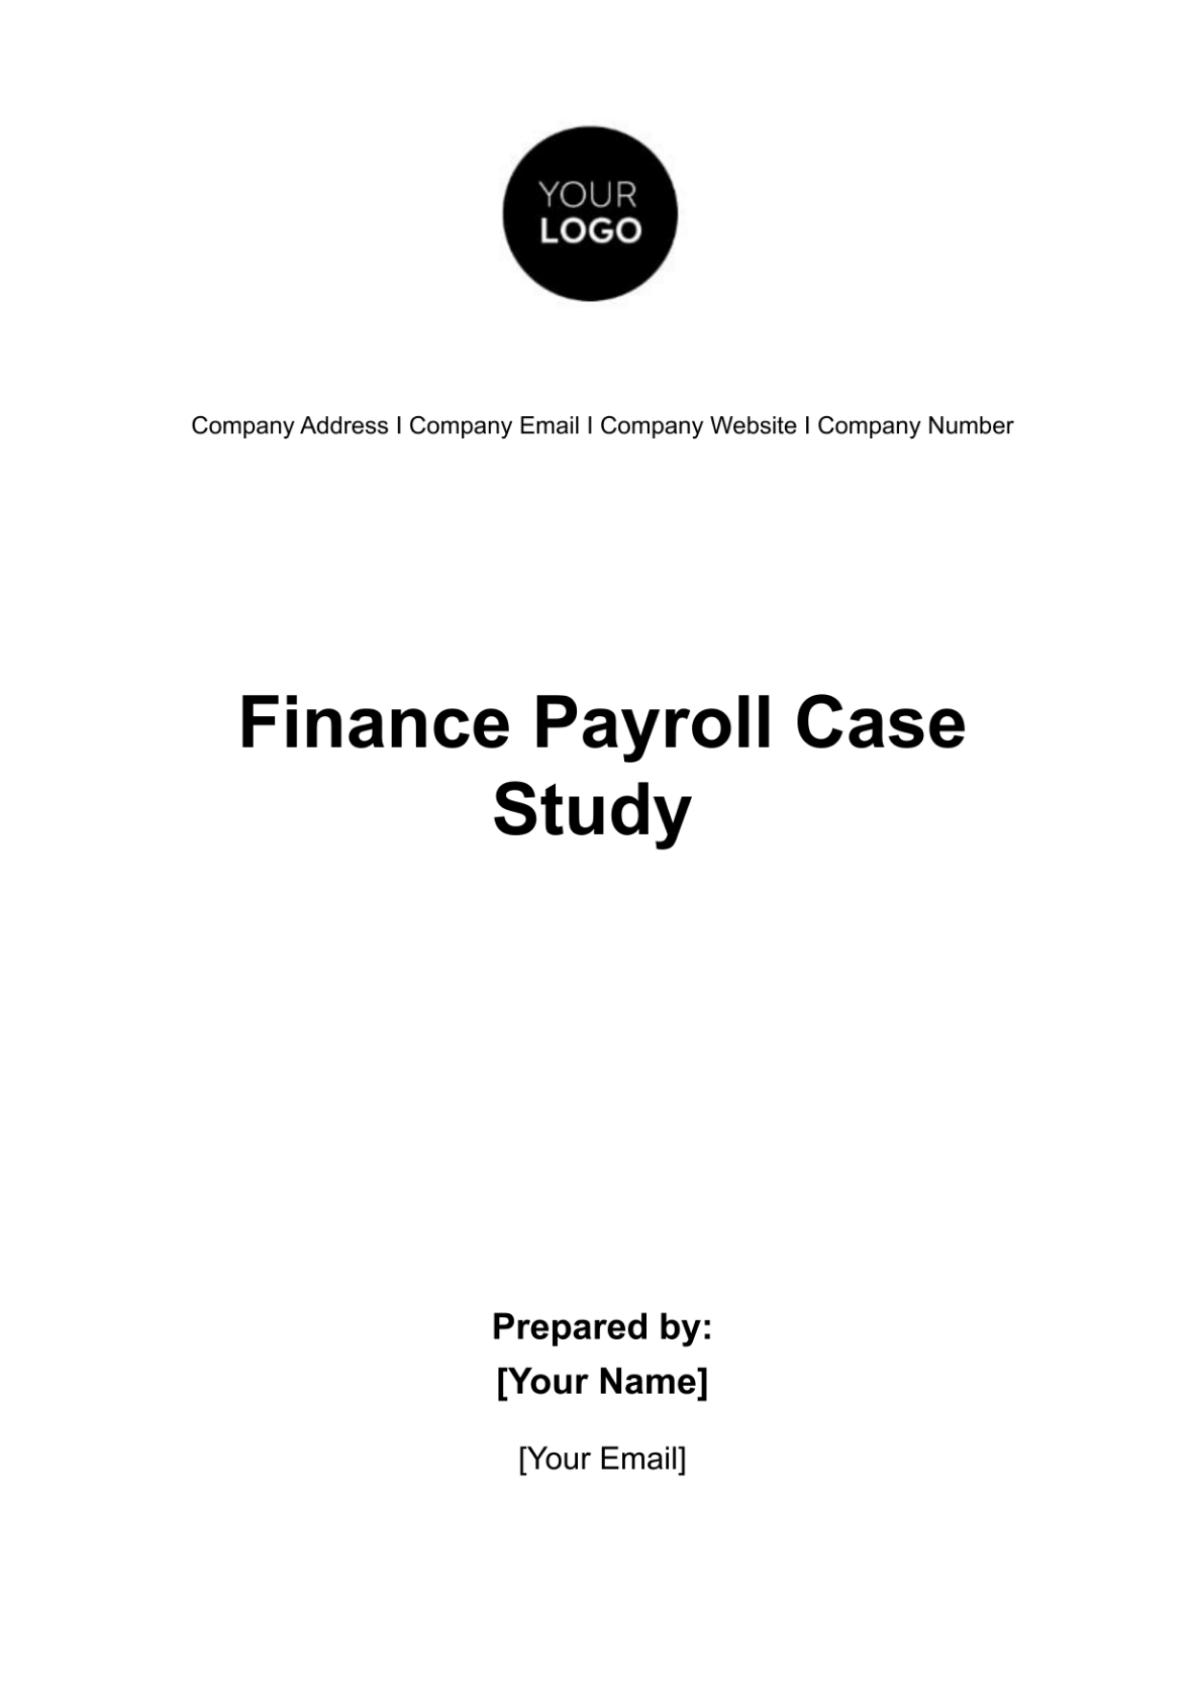 Finance Payroll Case Study Template